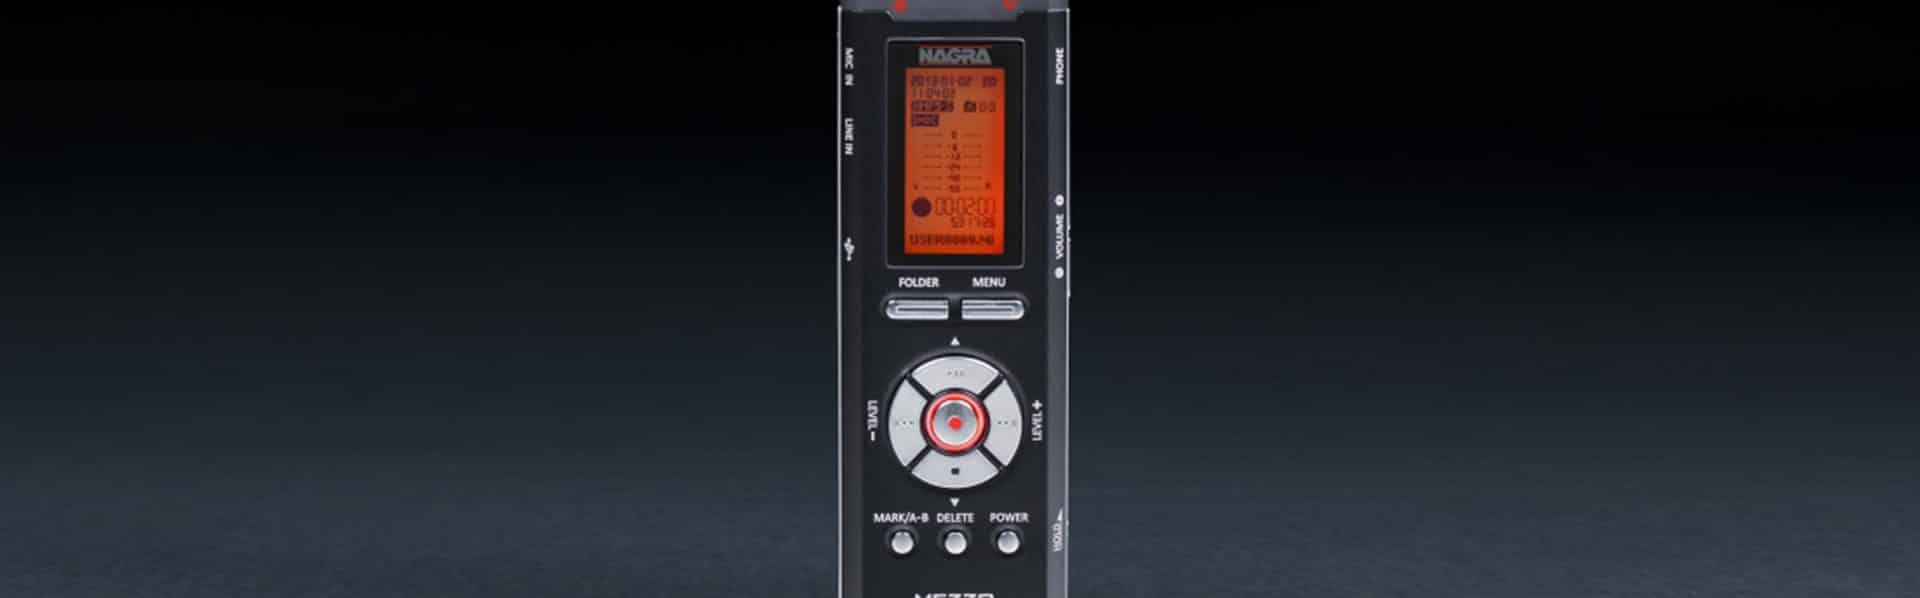 Nagra Mezzo miniature recorder handheld digital front rec button